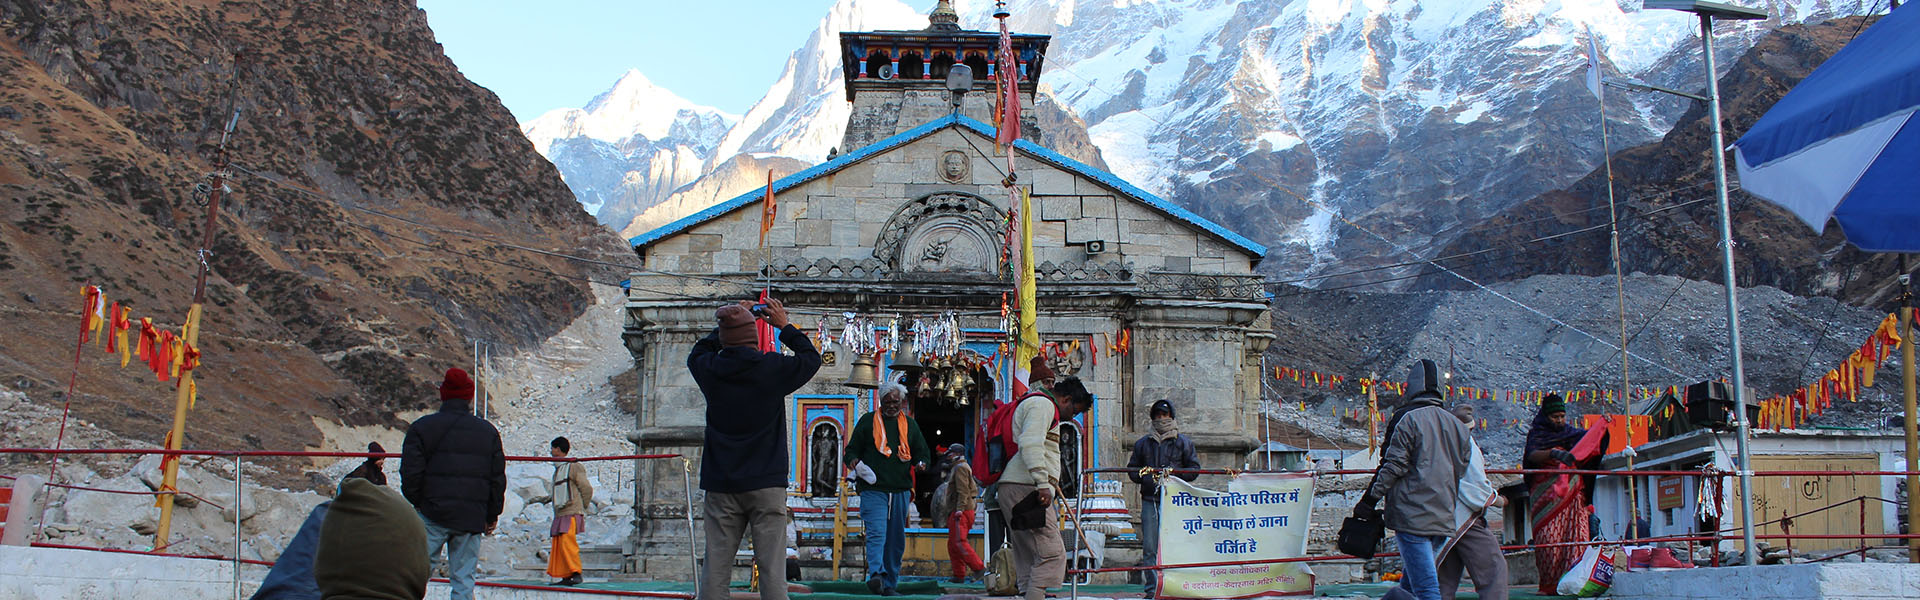 Shri Kedarnath ji Yatra